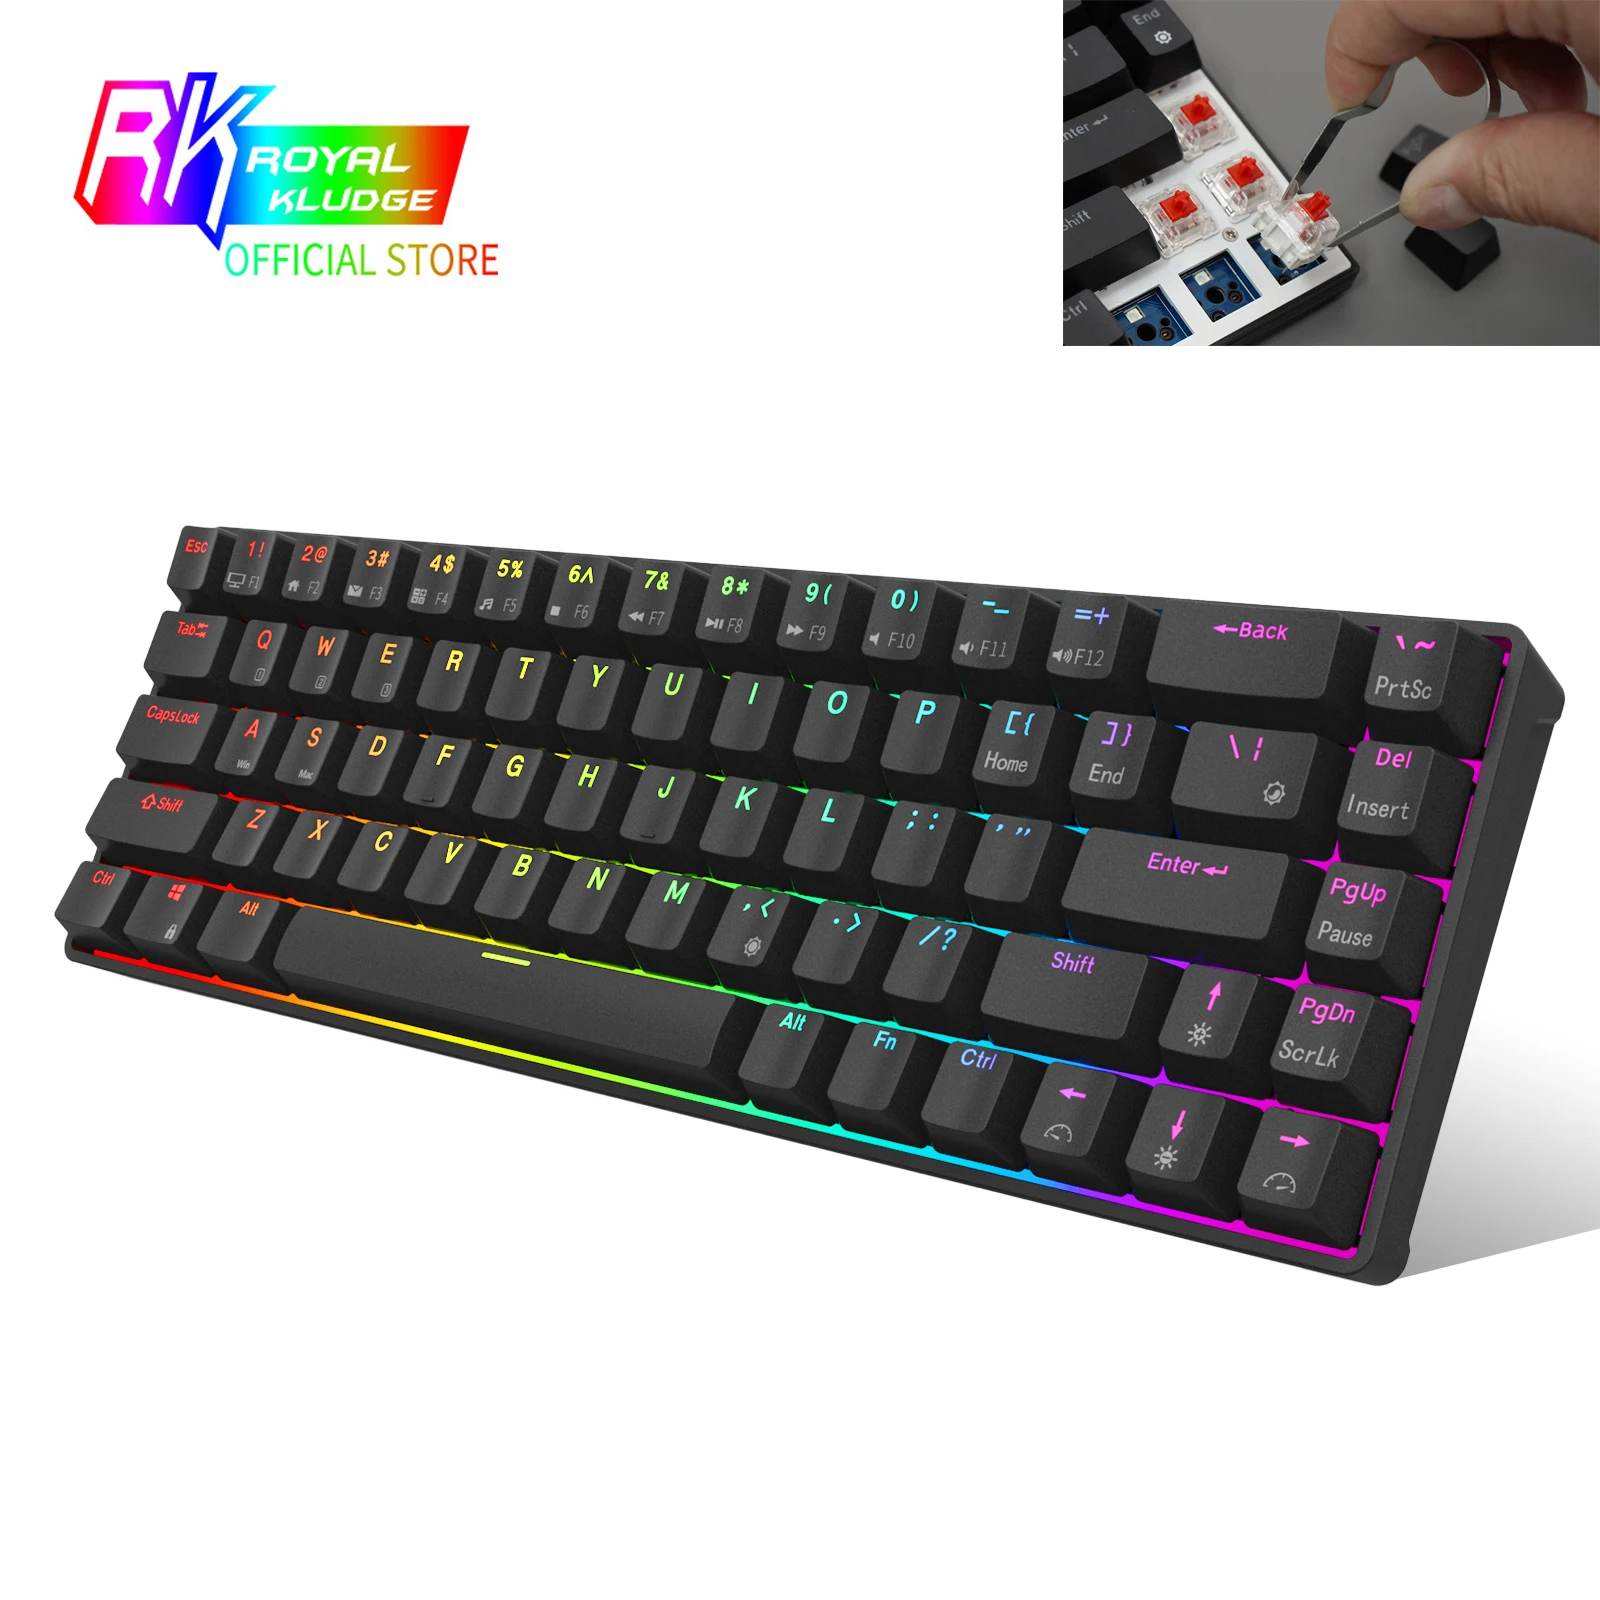 Permalink to RK68 (RK855) 65% Bluetooth RGB Hot Swappble Mechanical Gaming Keyboard Compact 68 Keys Wireless Gamer Keyboard for PC Laptop